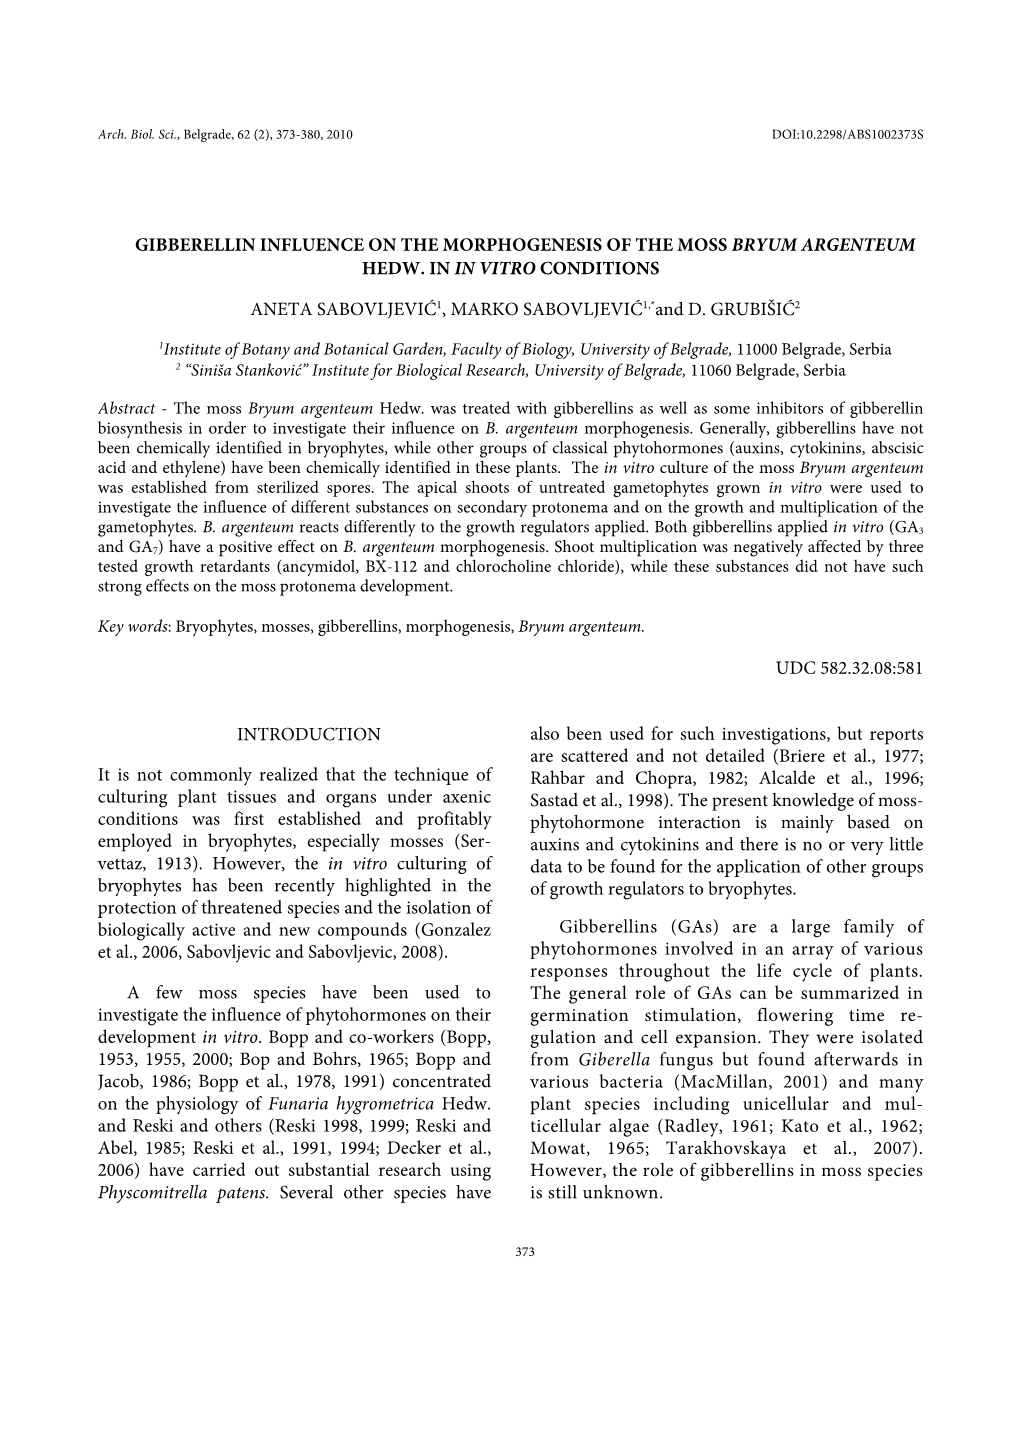 Gibberellin Influence on the Morphogenesis of the Moss Bryum Argenteum Hedw